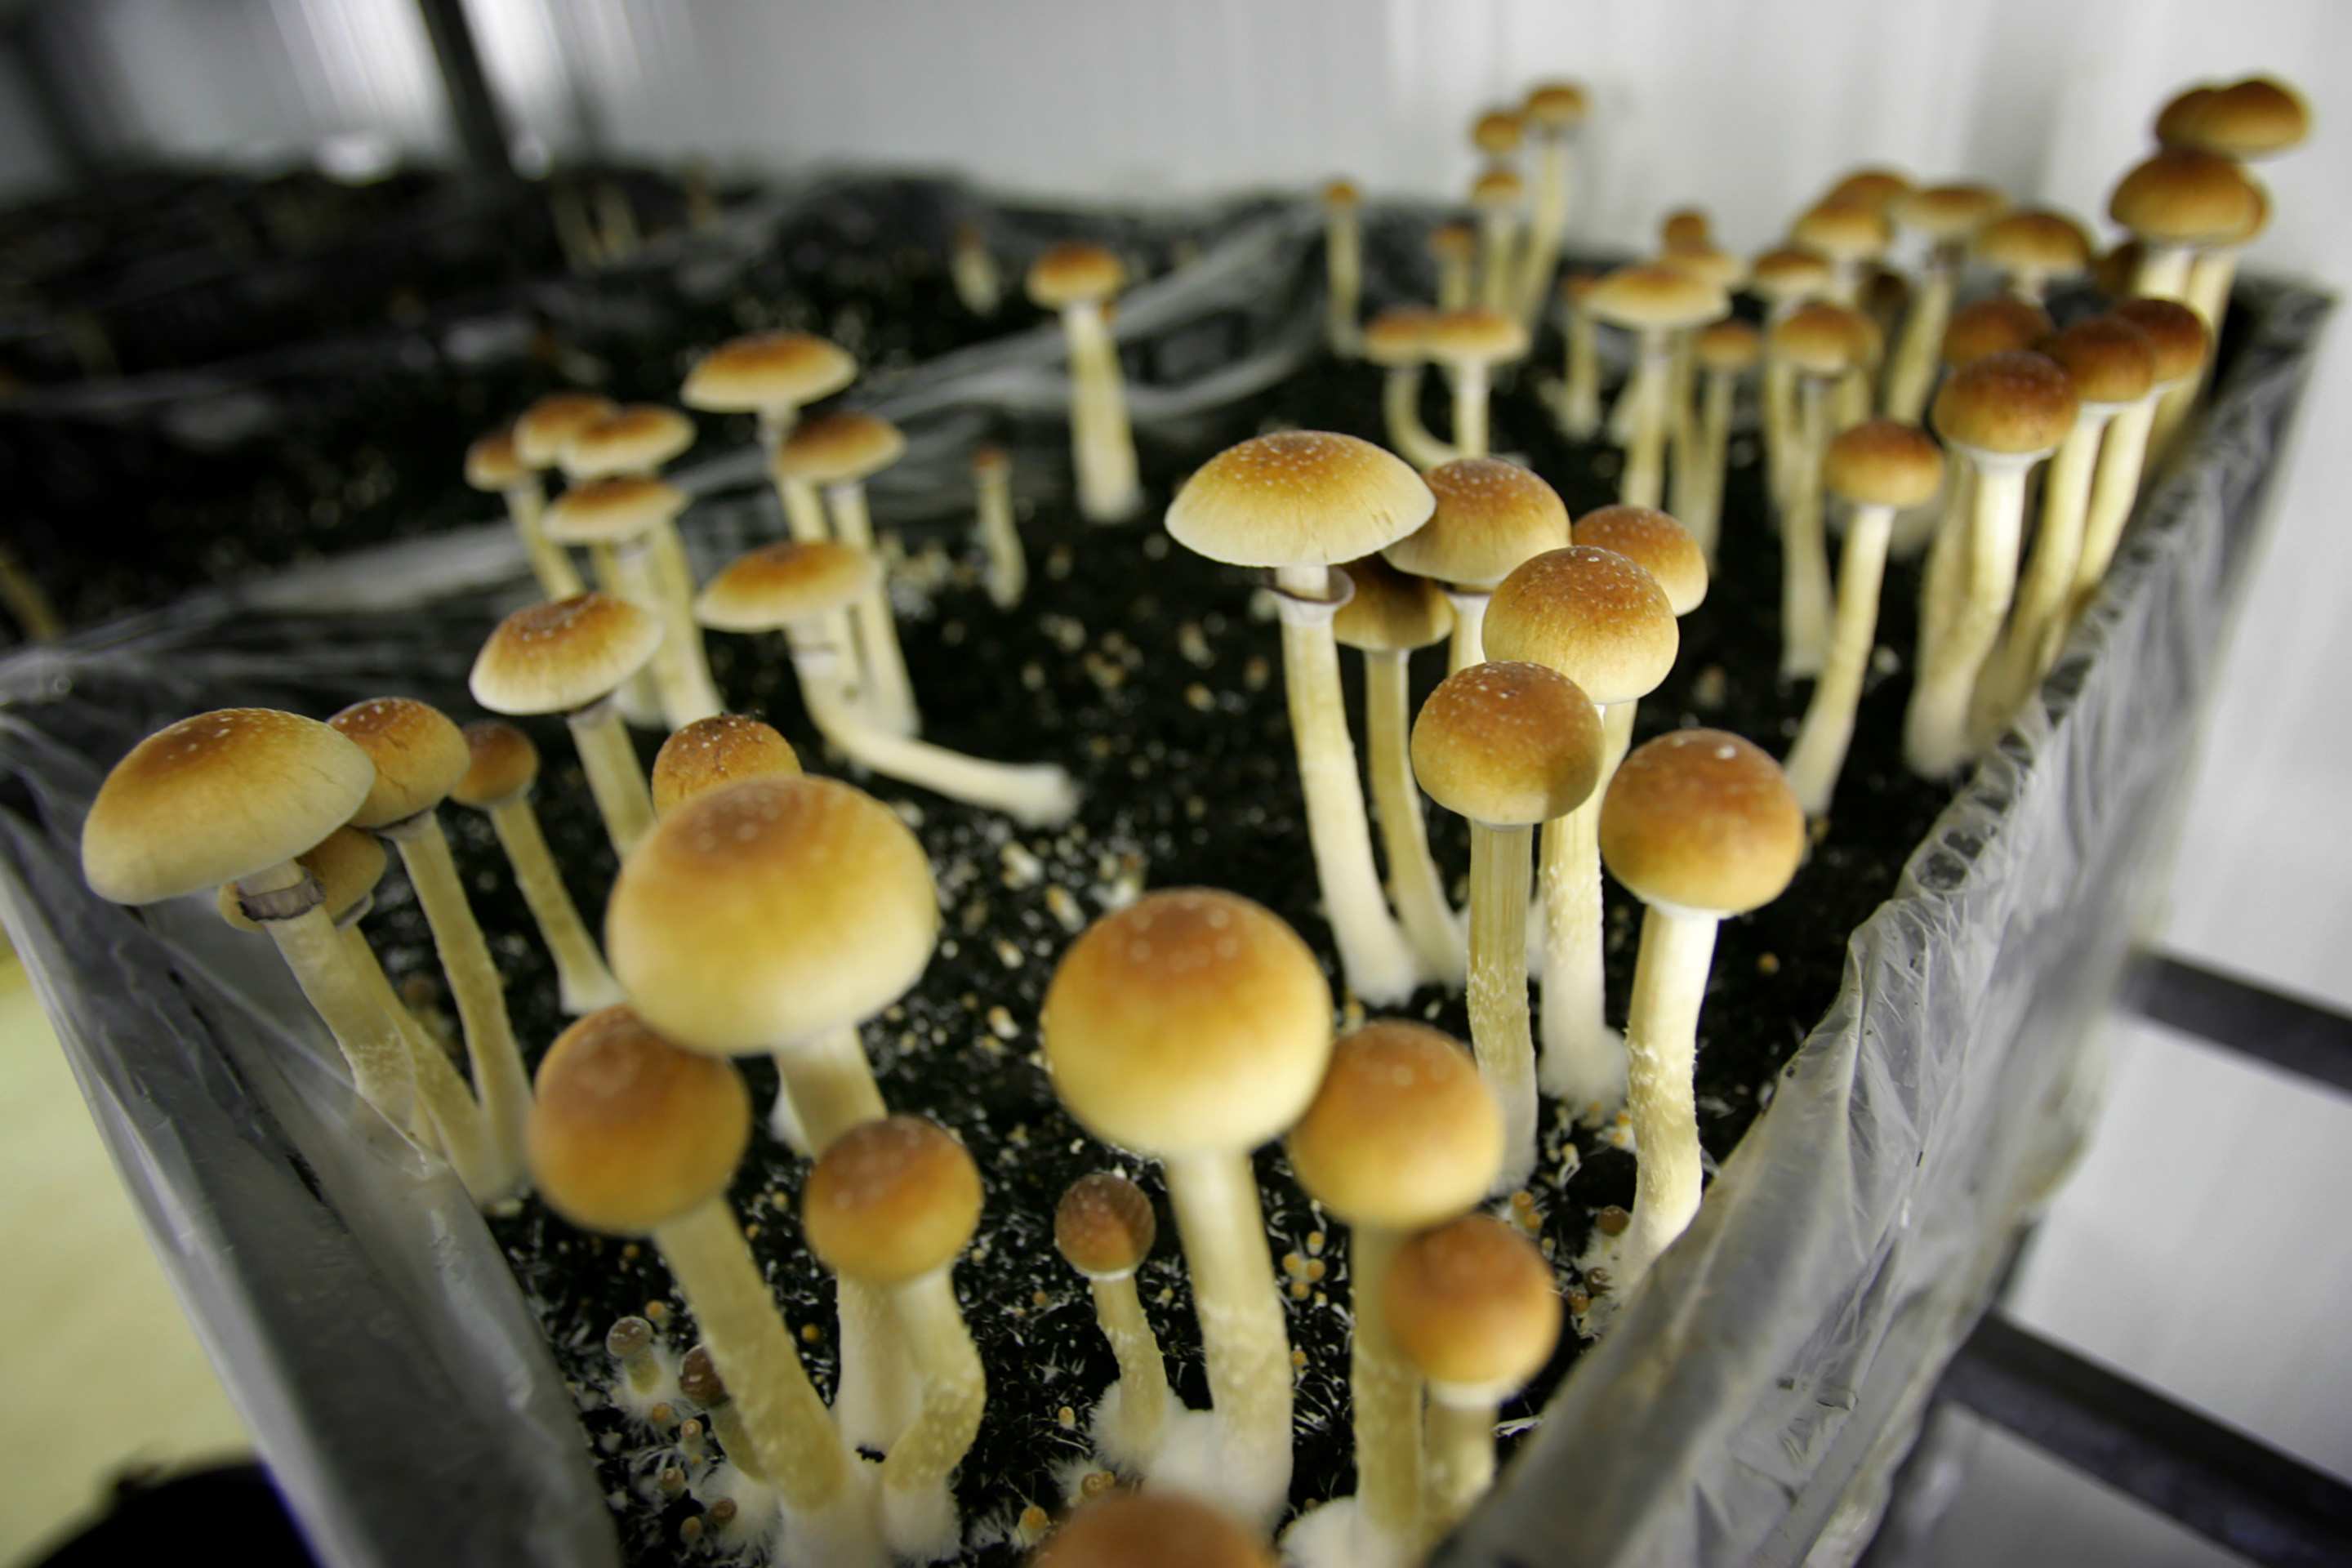 Magic mushroom (champignon magique) is a product in great demand